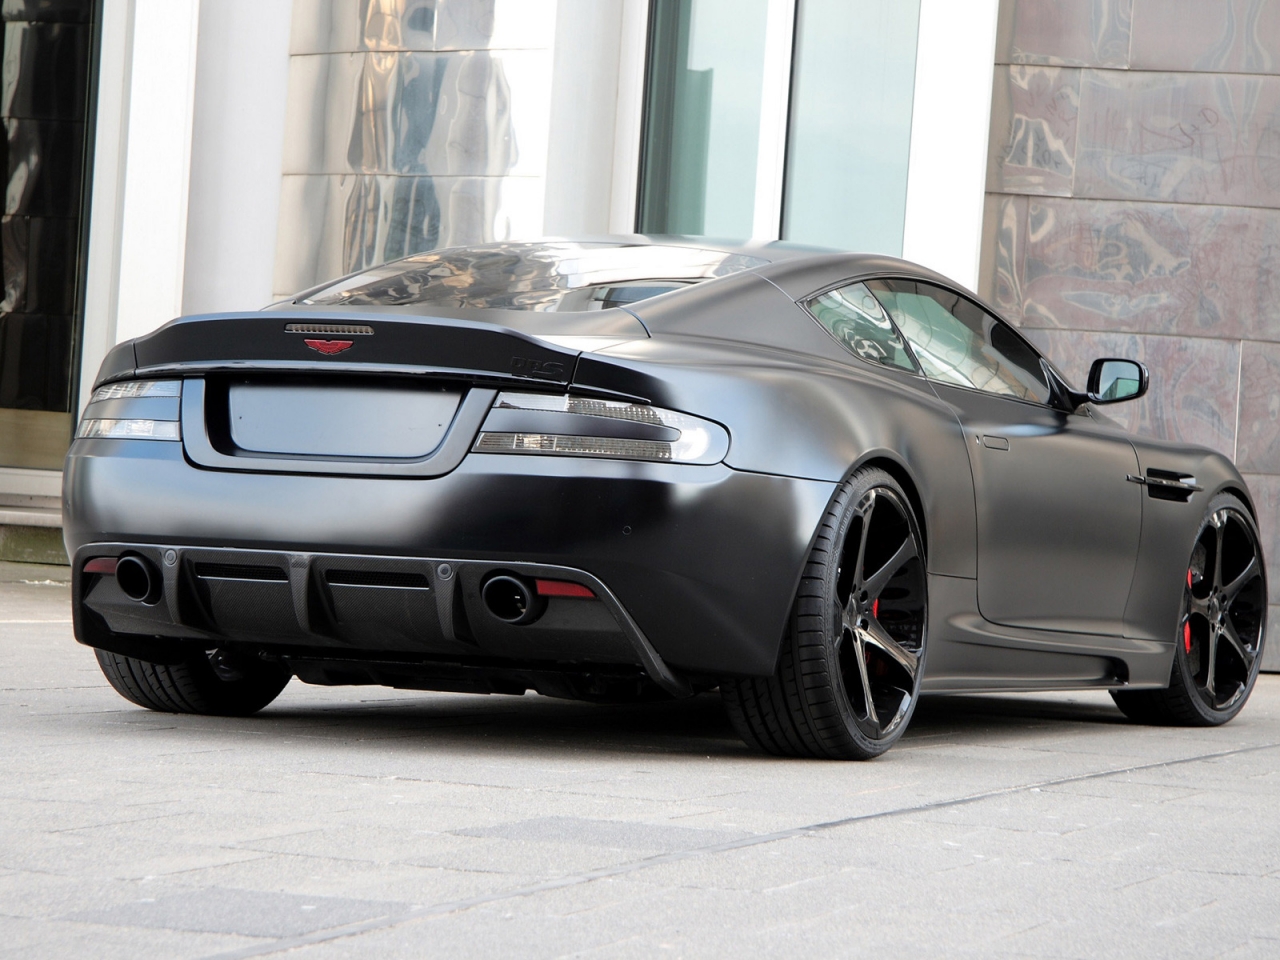 Aston Martin DBS Superior Black Edition Rear for 1280 x 960 resolution